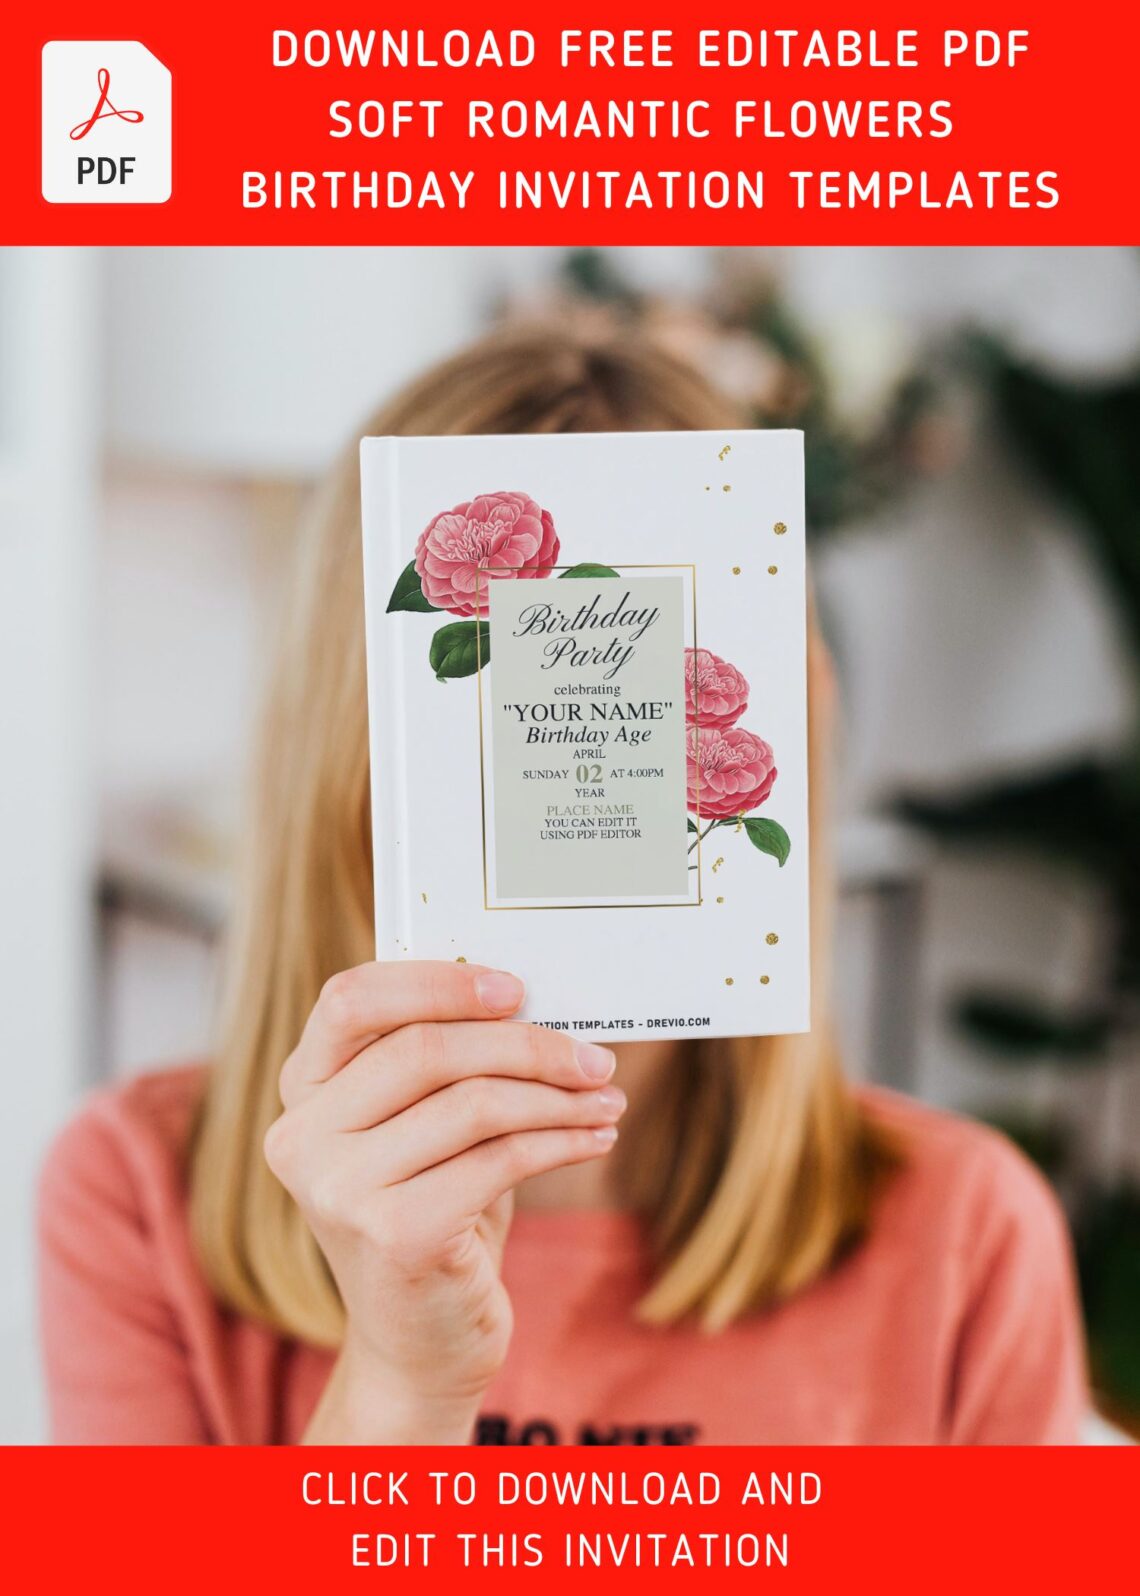 (Free Editable PDF) Sweet Romantic Camellia Minimalist Birthday Invitation Templates with blush pink camellia and rose